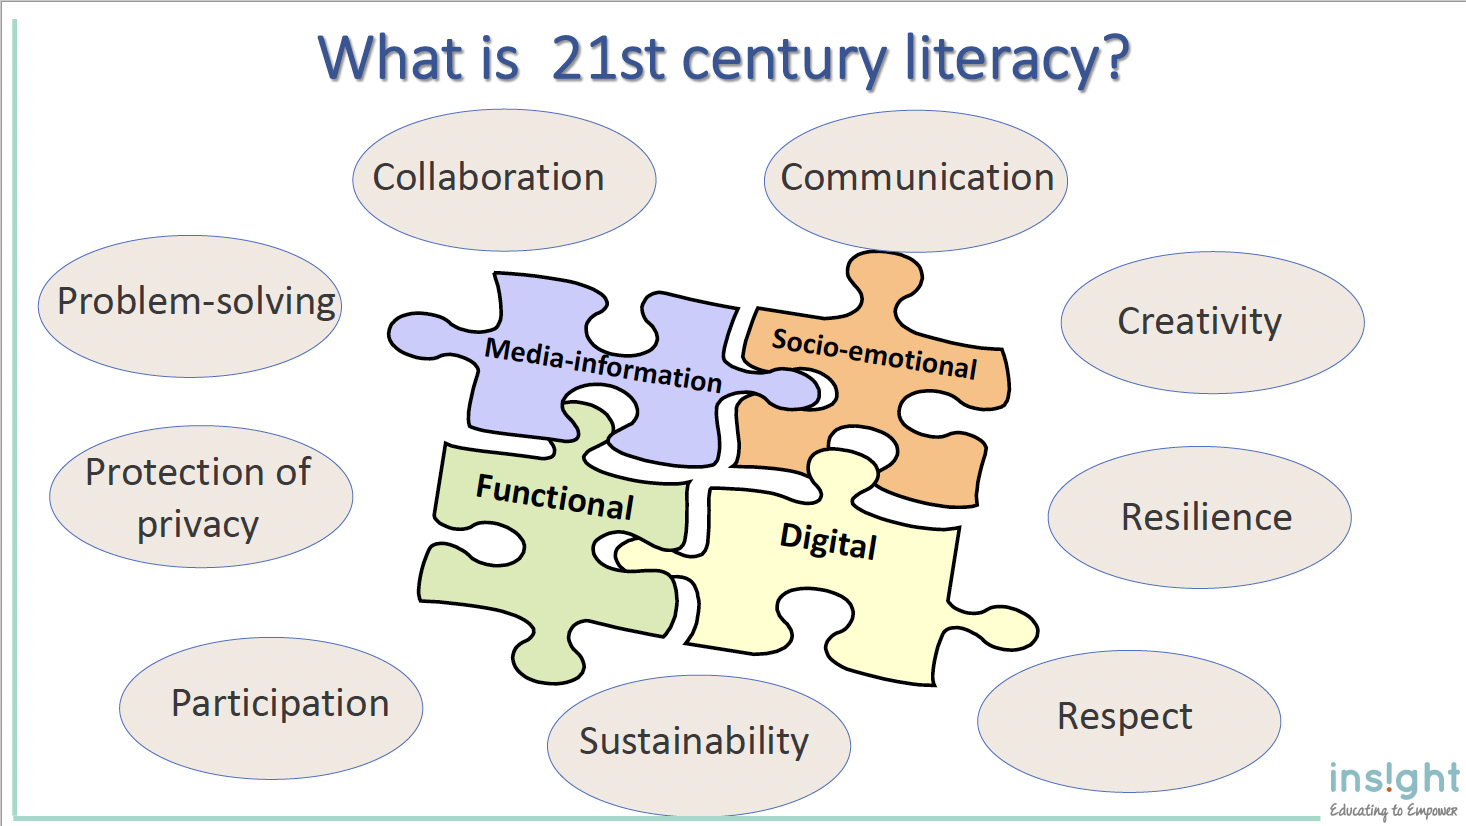 21st century literacy